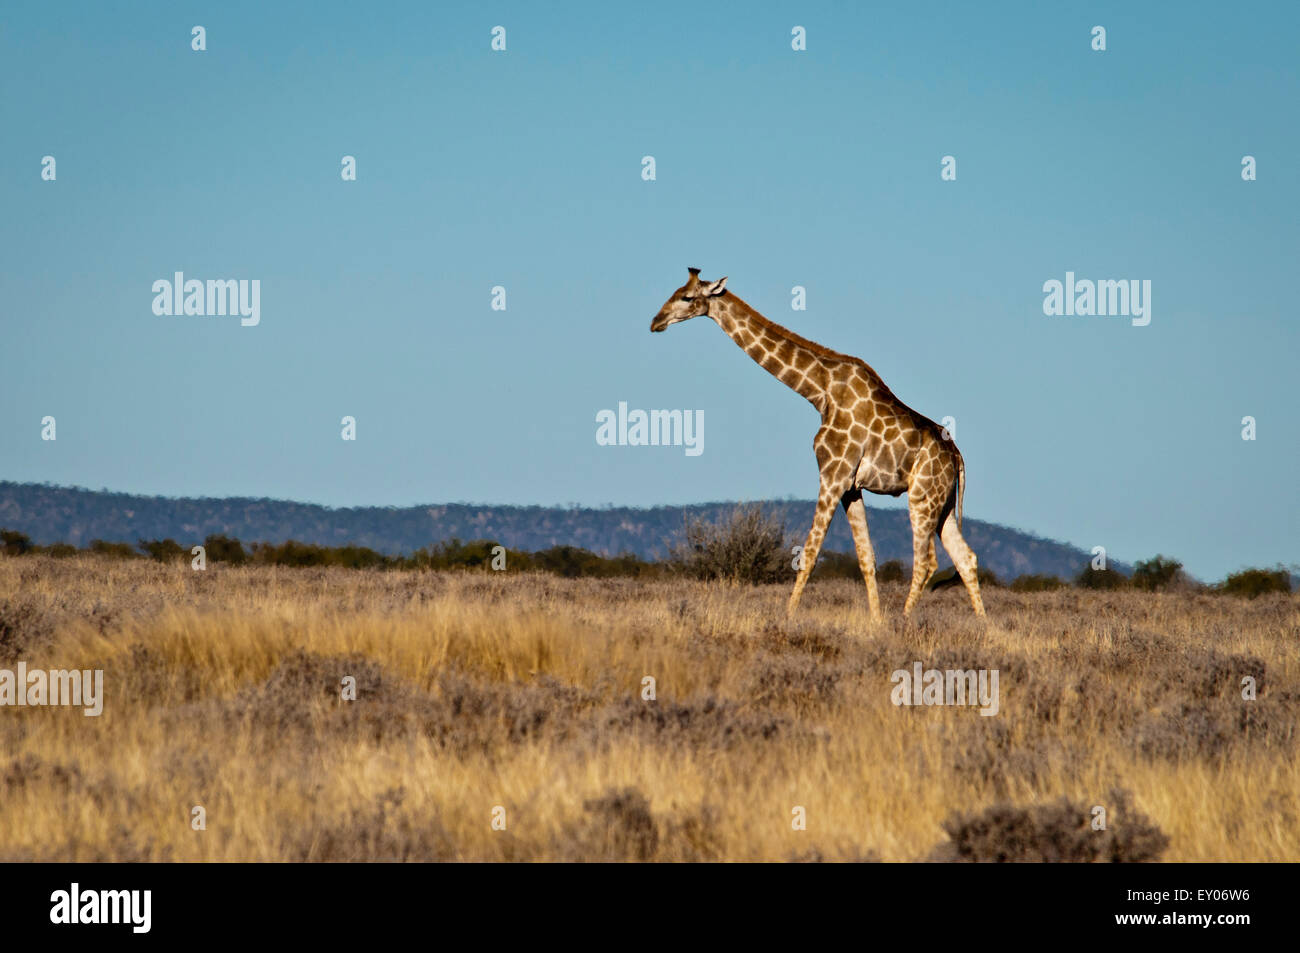 Solitary Giraffe, Giraffa camelopardalis, walking across a grassy plain in Etosha National Park, Namibia, Africa Stock Photo